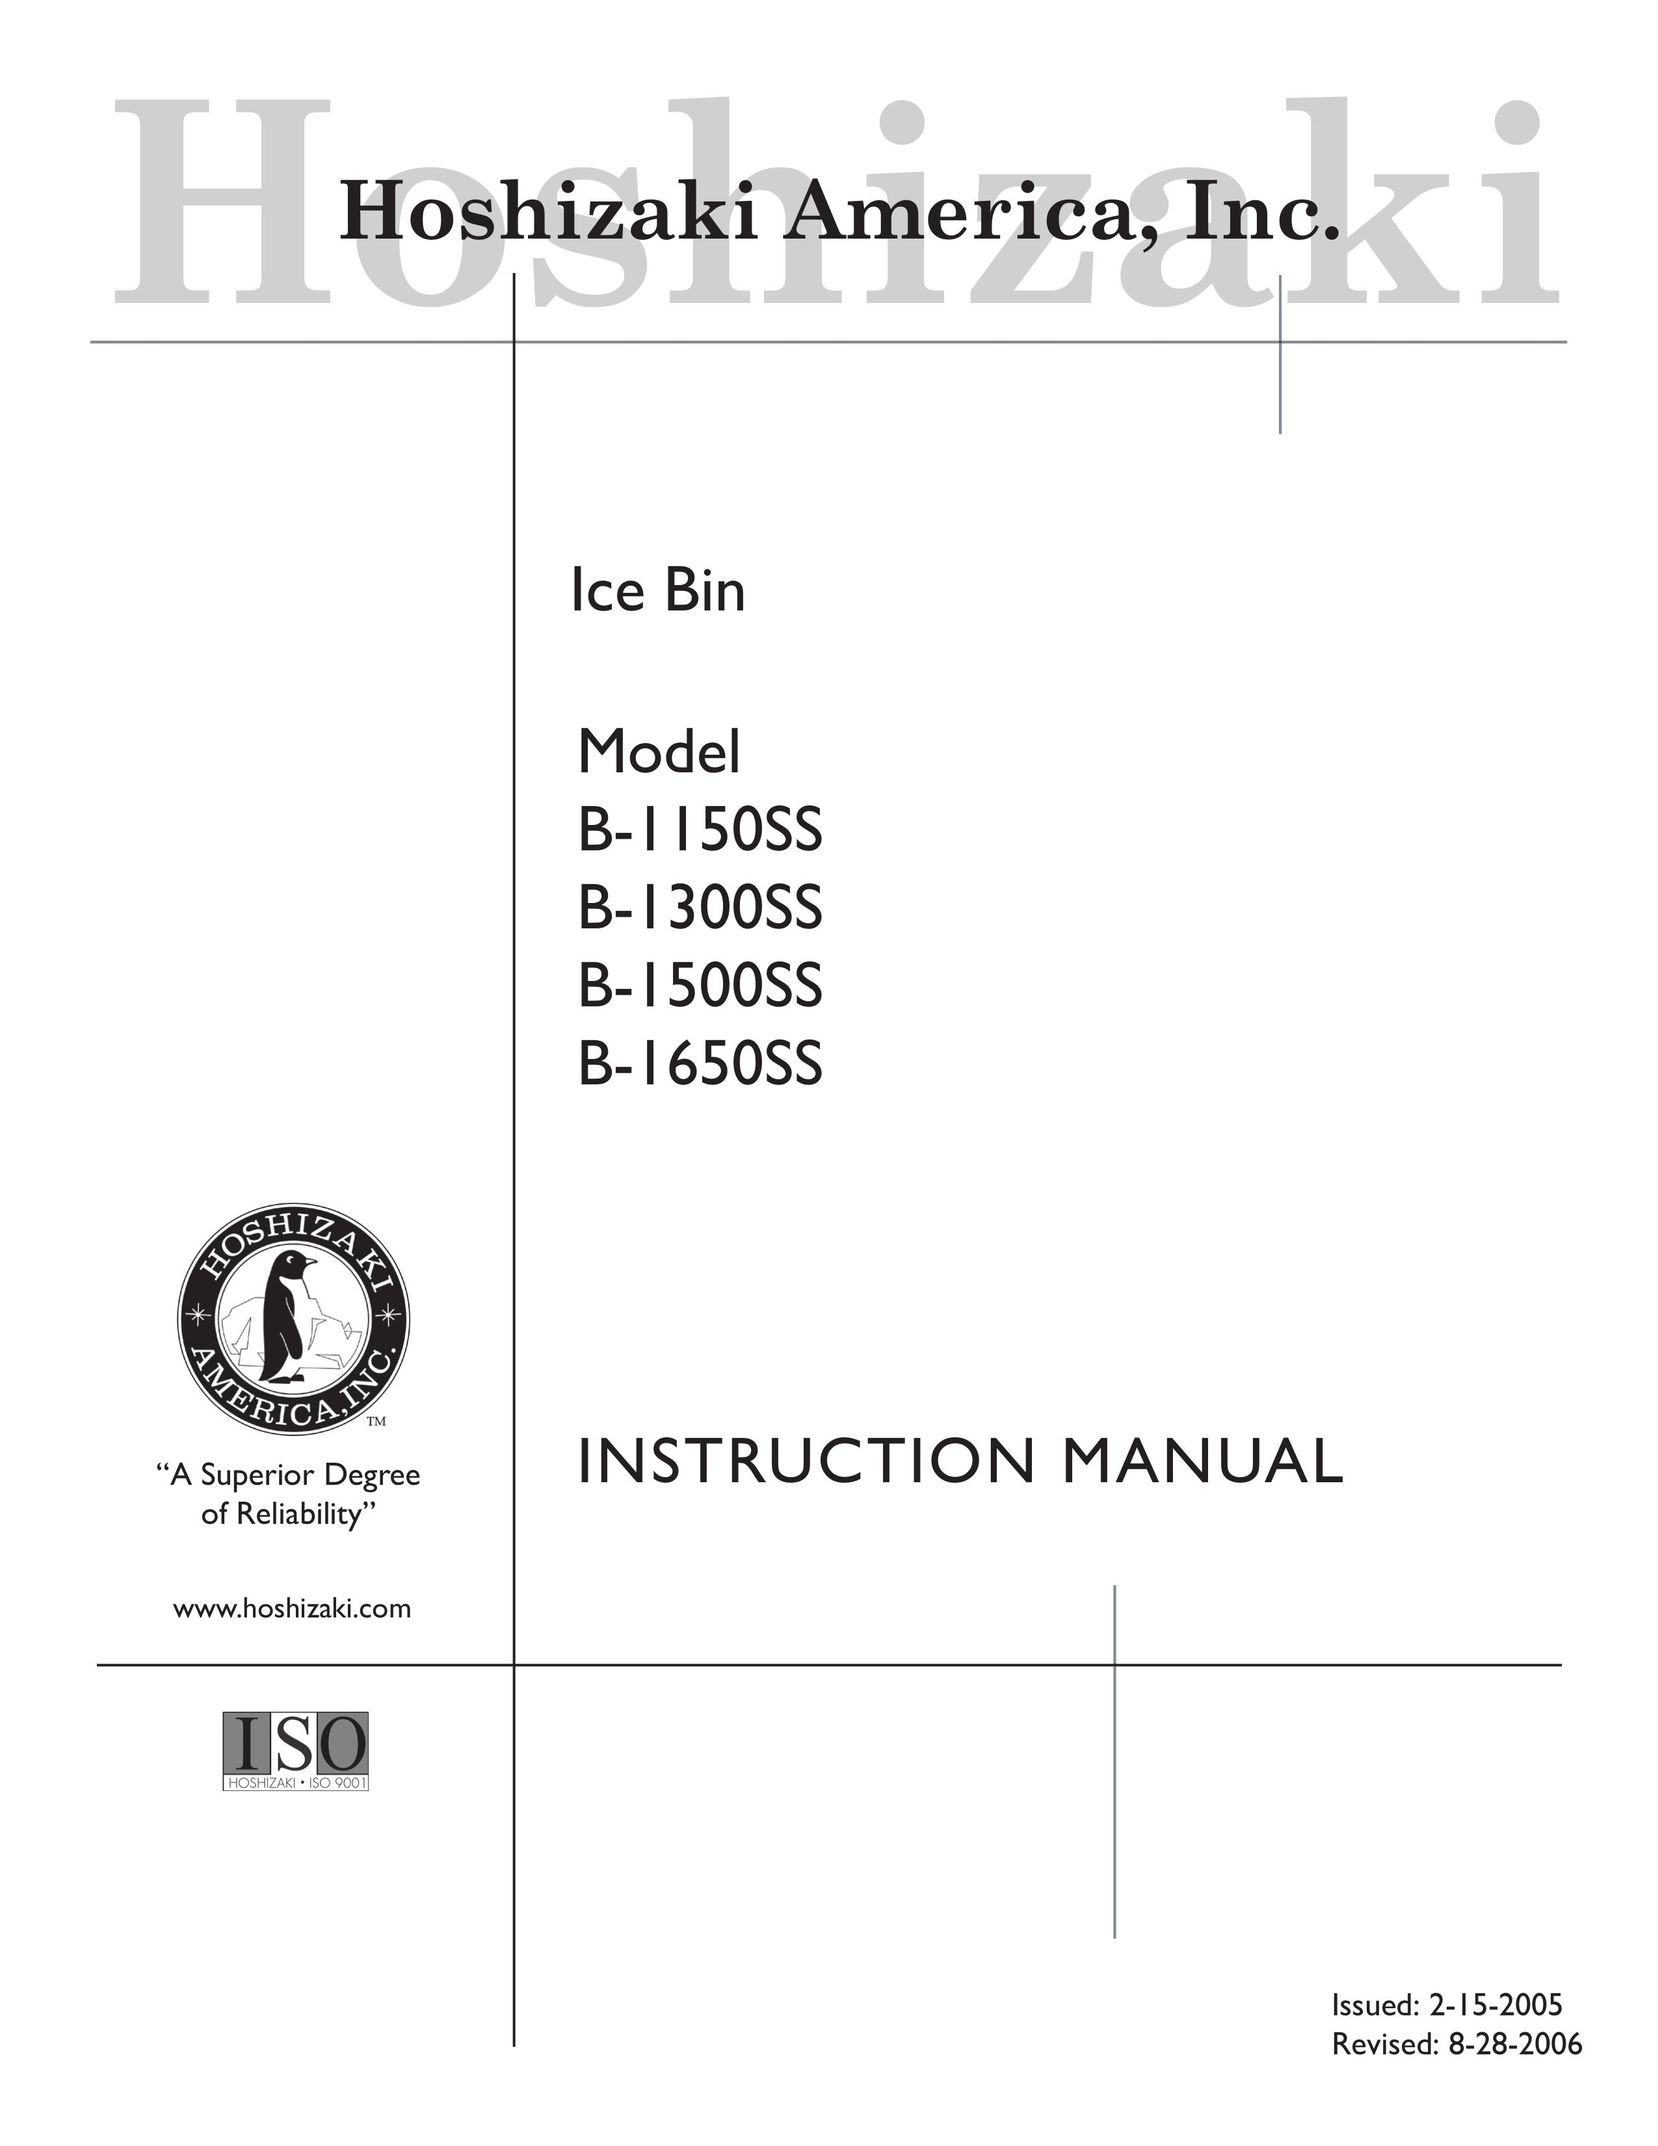 Hoshizaki B-1500SS Ice Maker User Manual